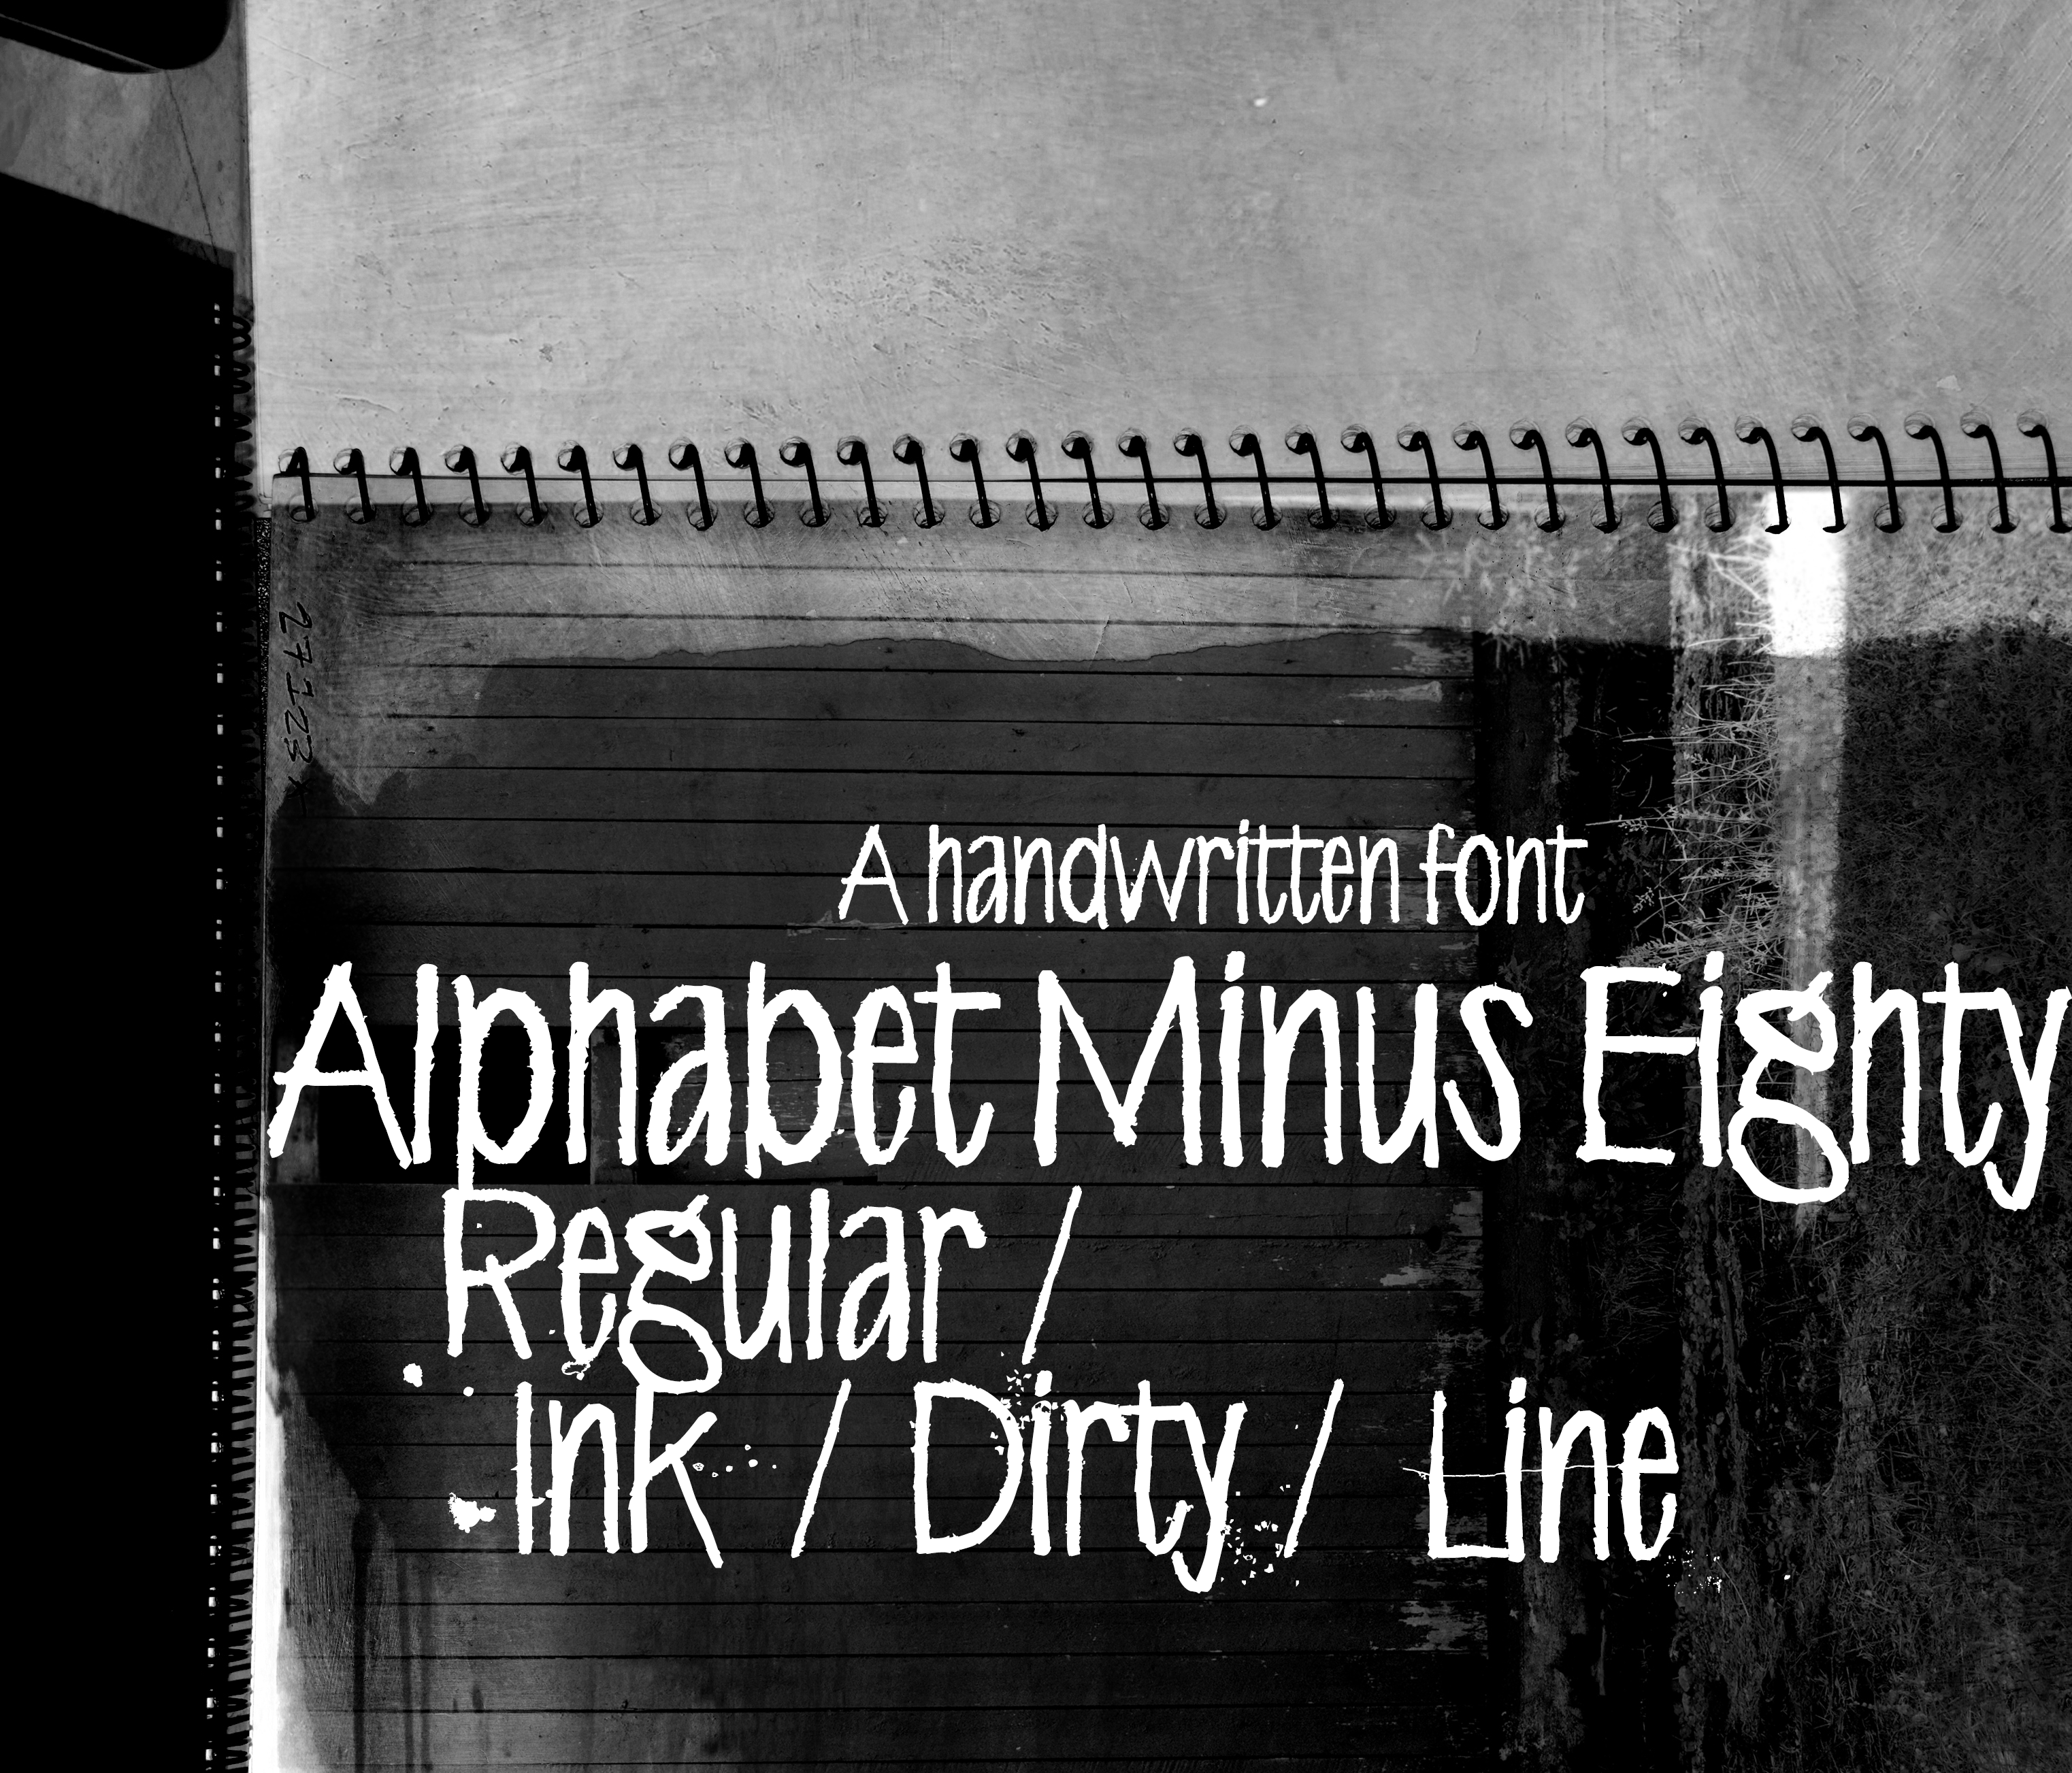 Alphabet Minus Eighty